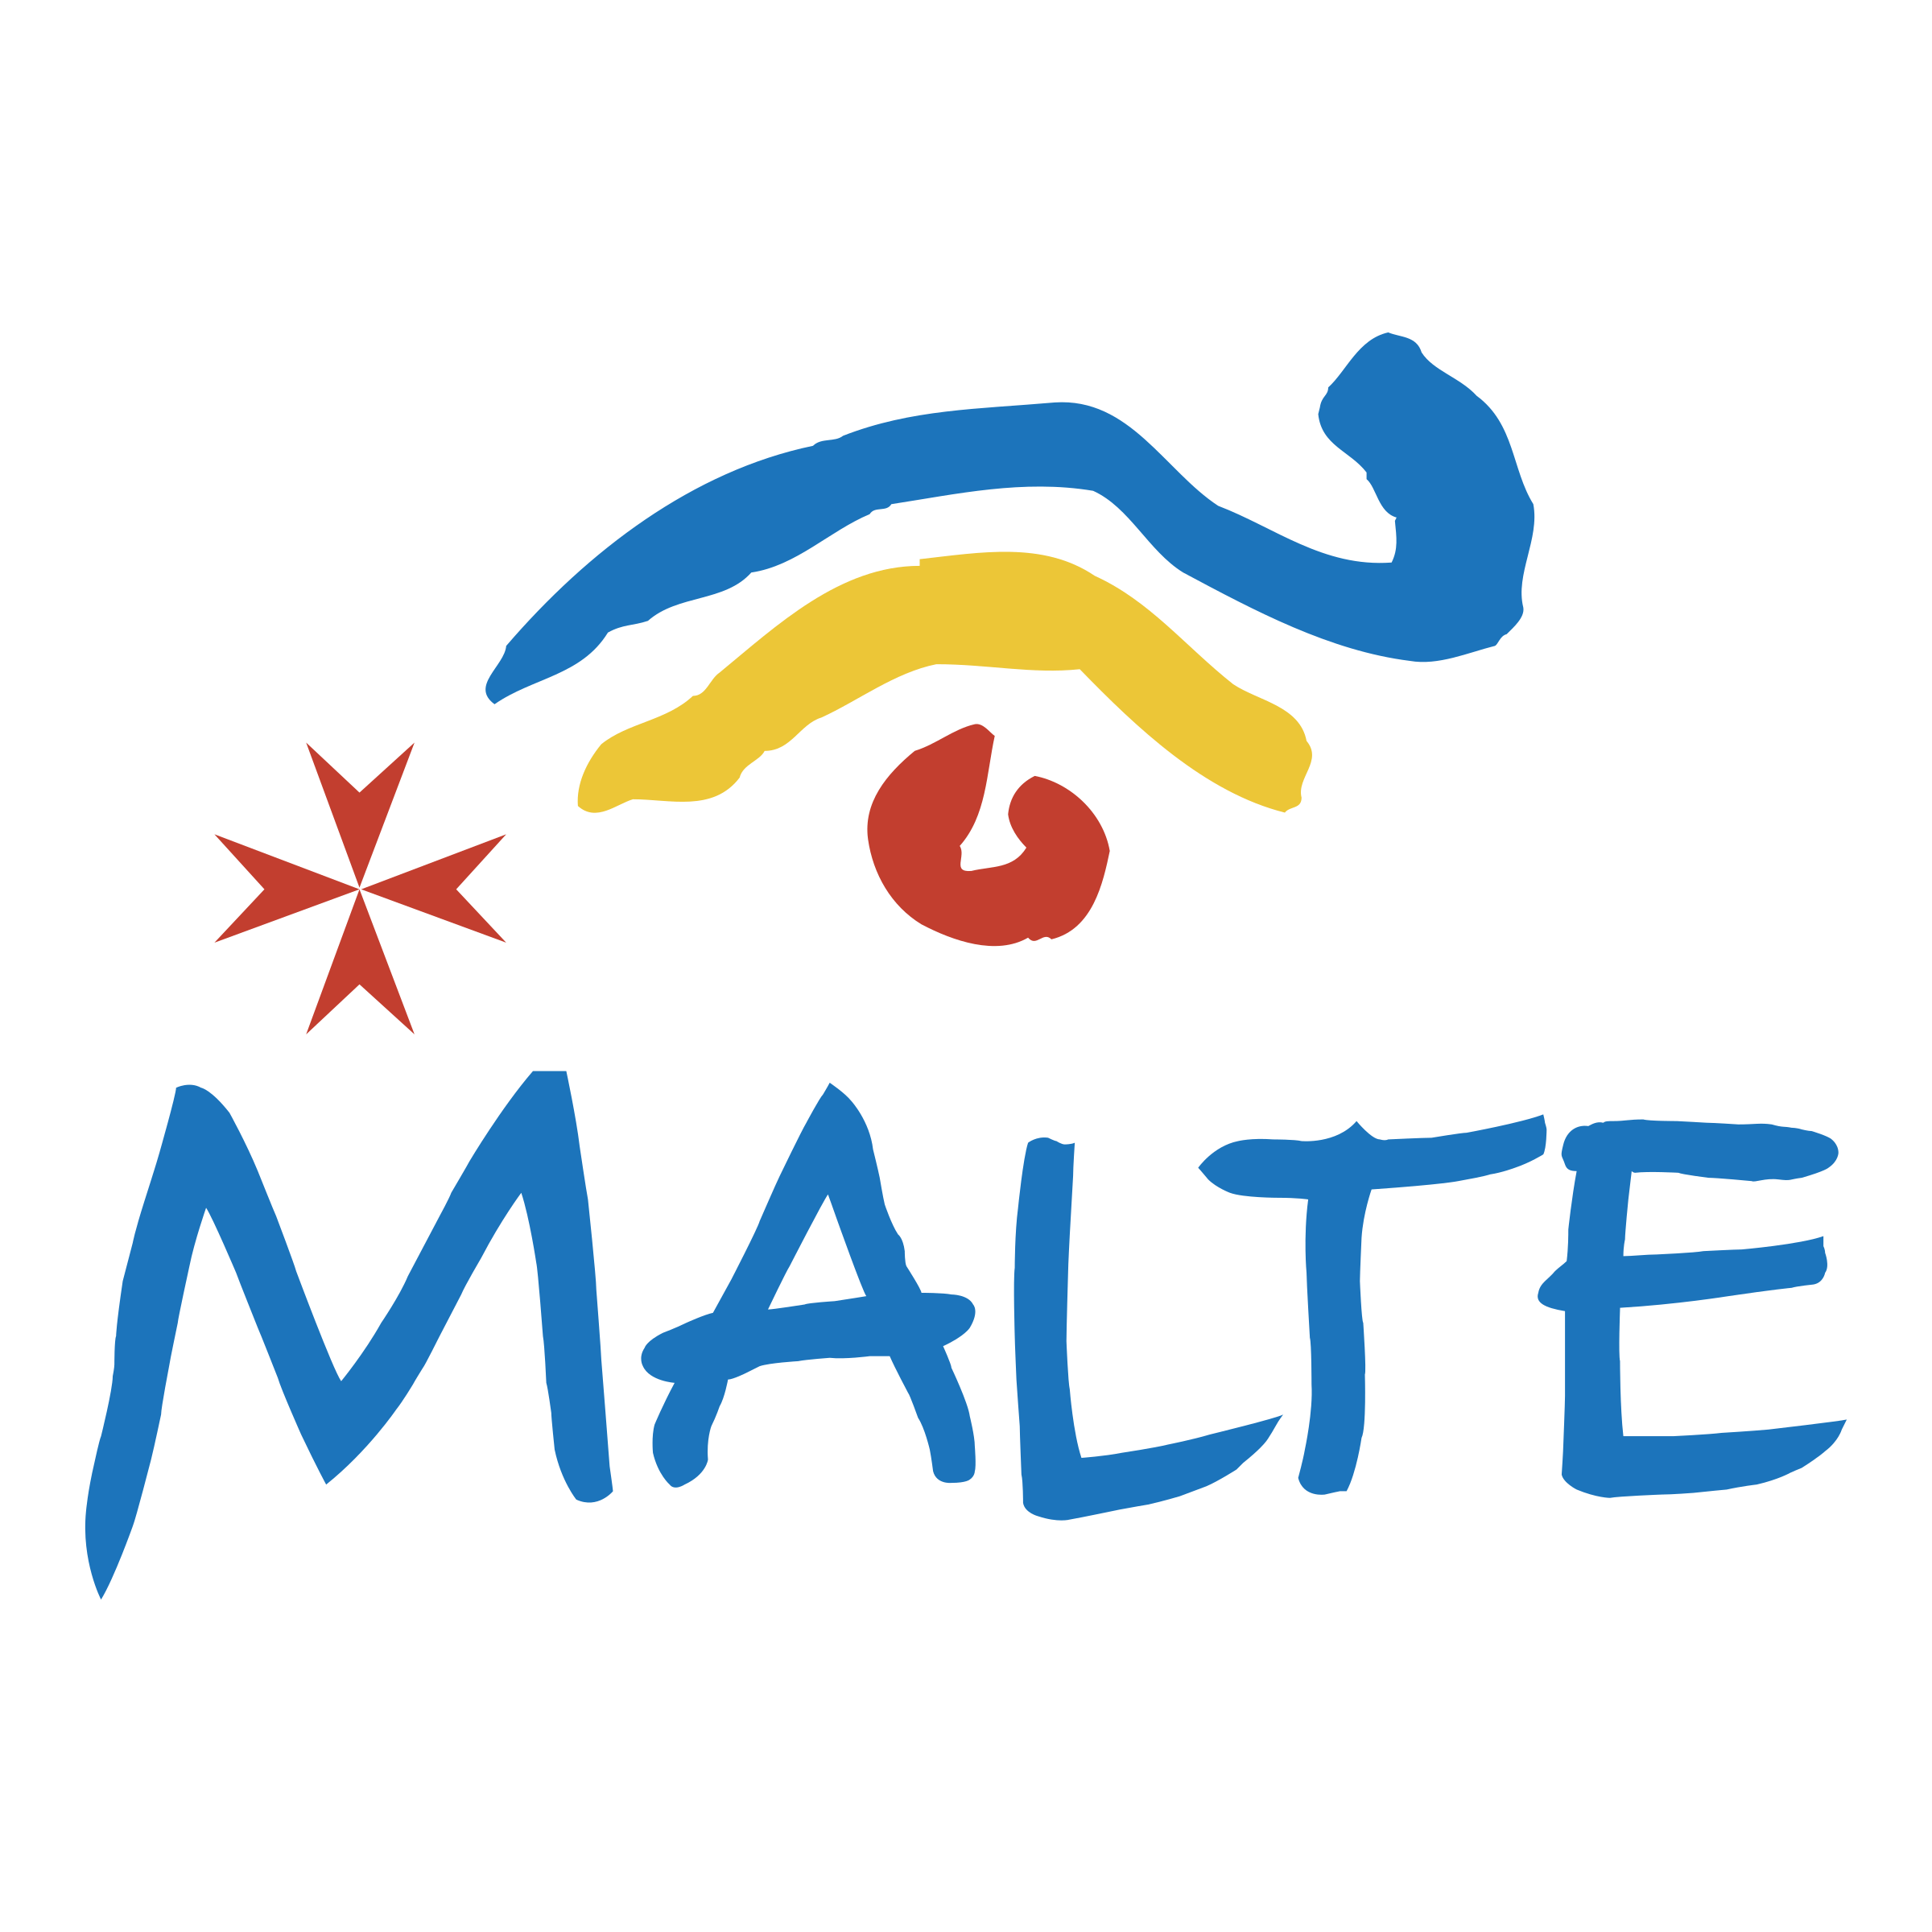 Malte Logo - Malte Logo PNG Transparent & SVG Vector - Freebie Supply